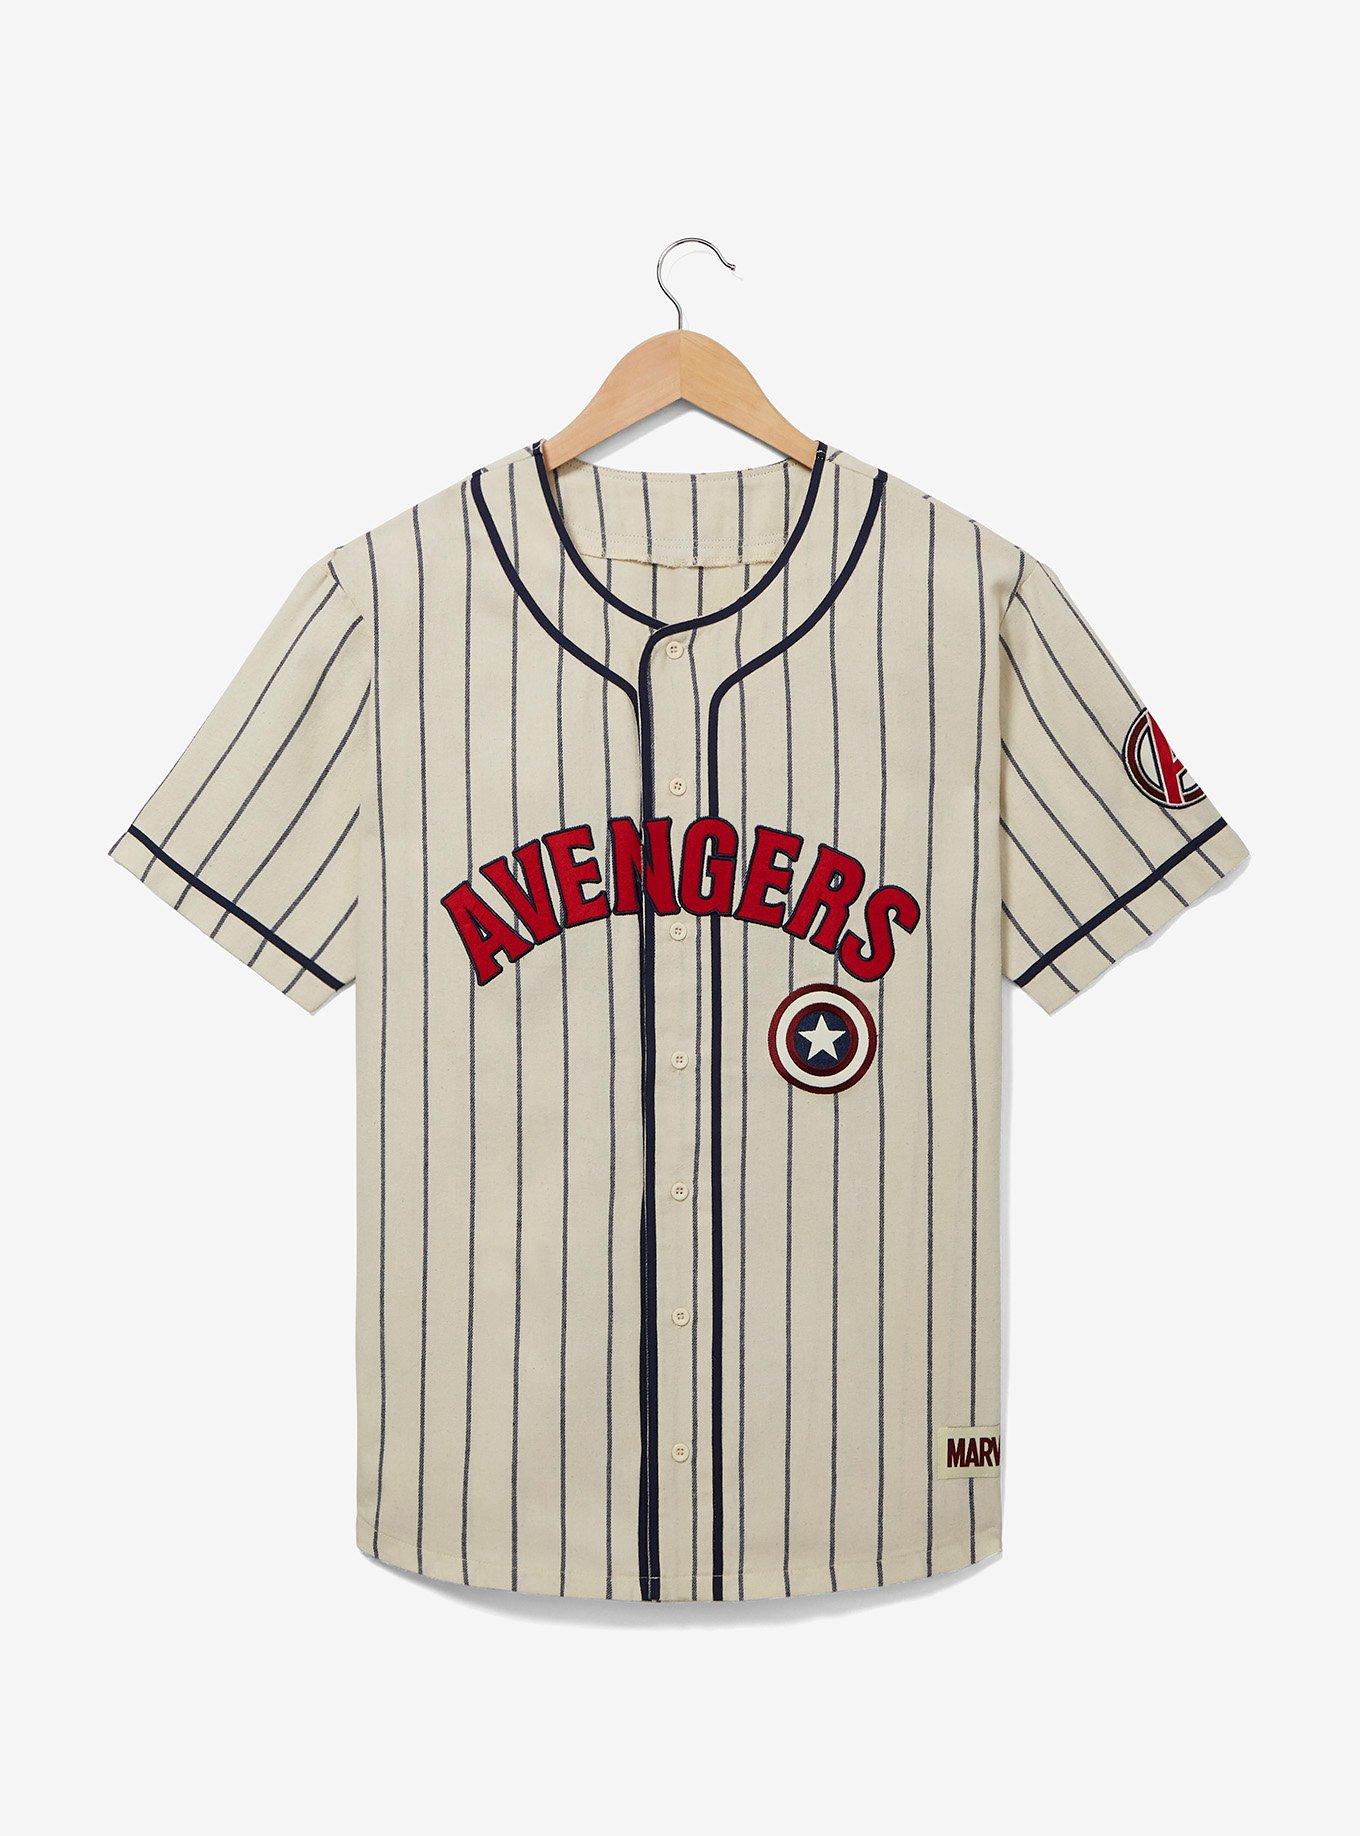 Personalized Mickey Mouse All Star Baseball Jersey Shirt 